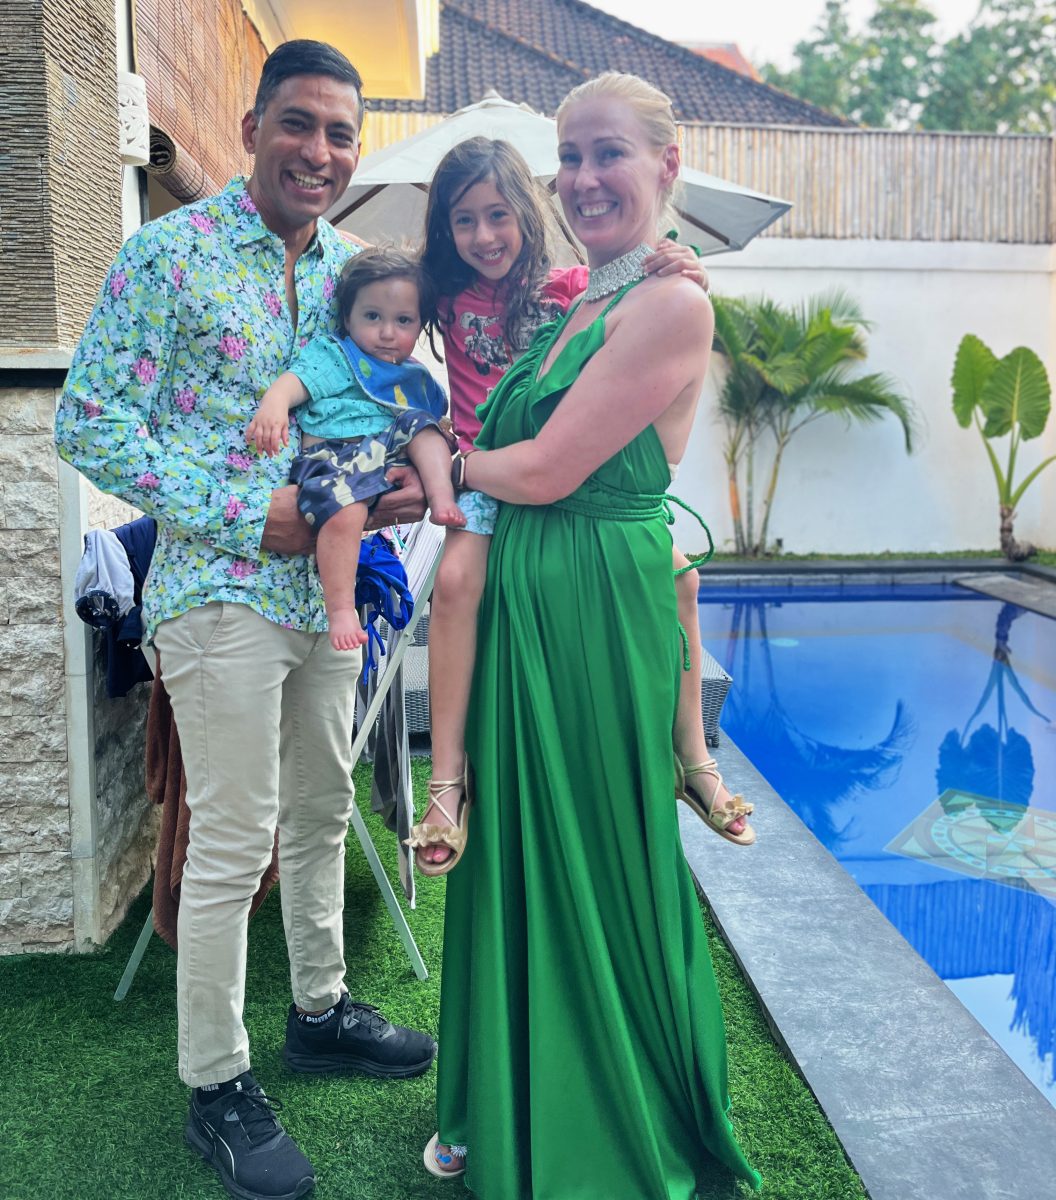 Rahul and Angela with their children, Bodhi and Malia